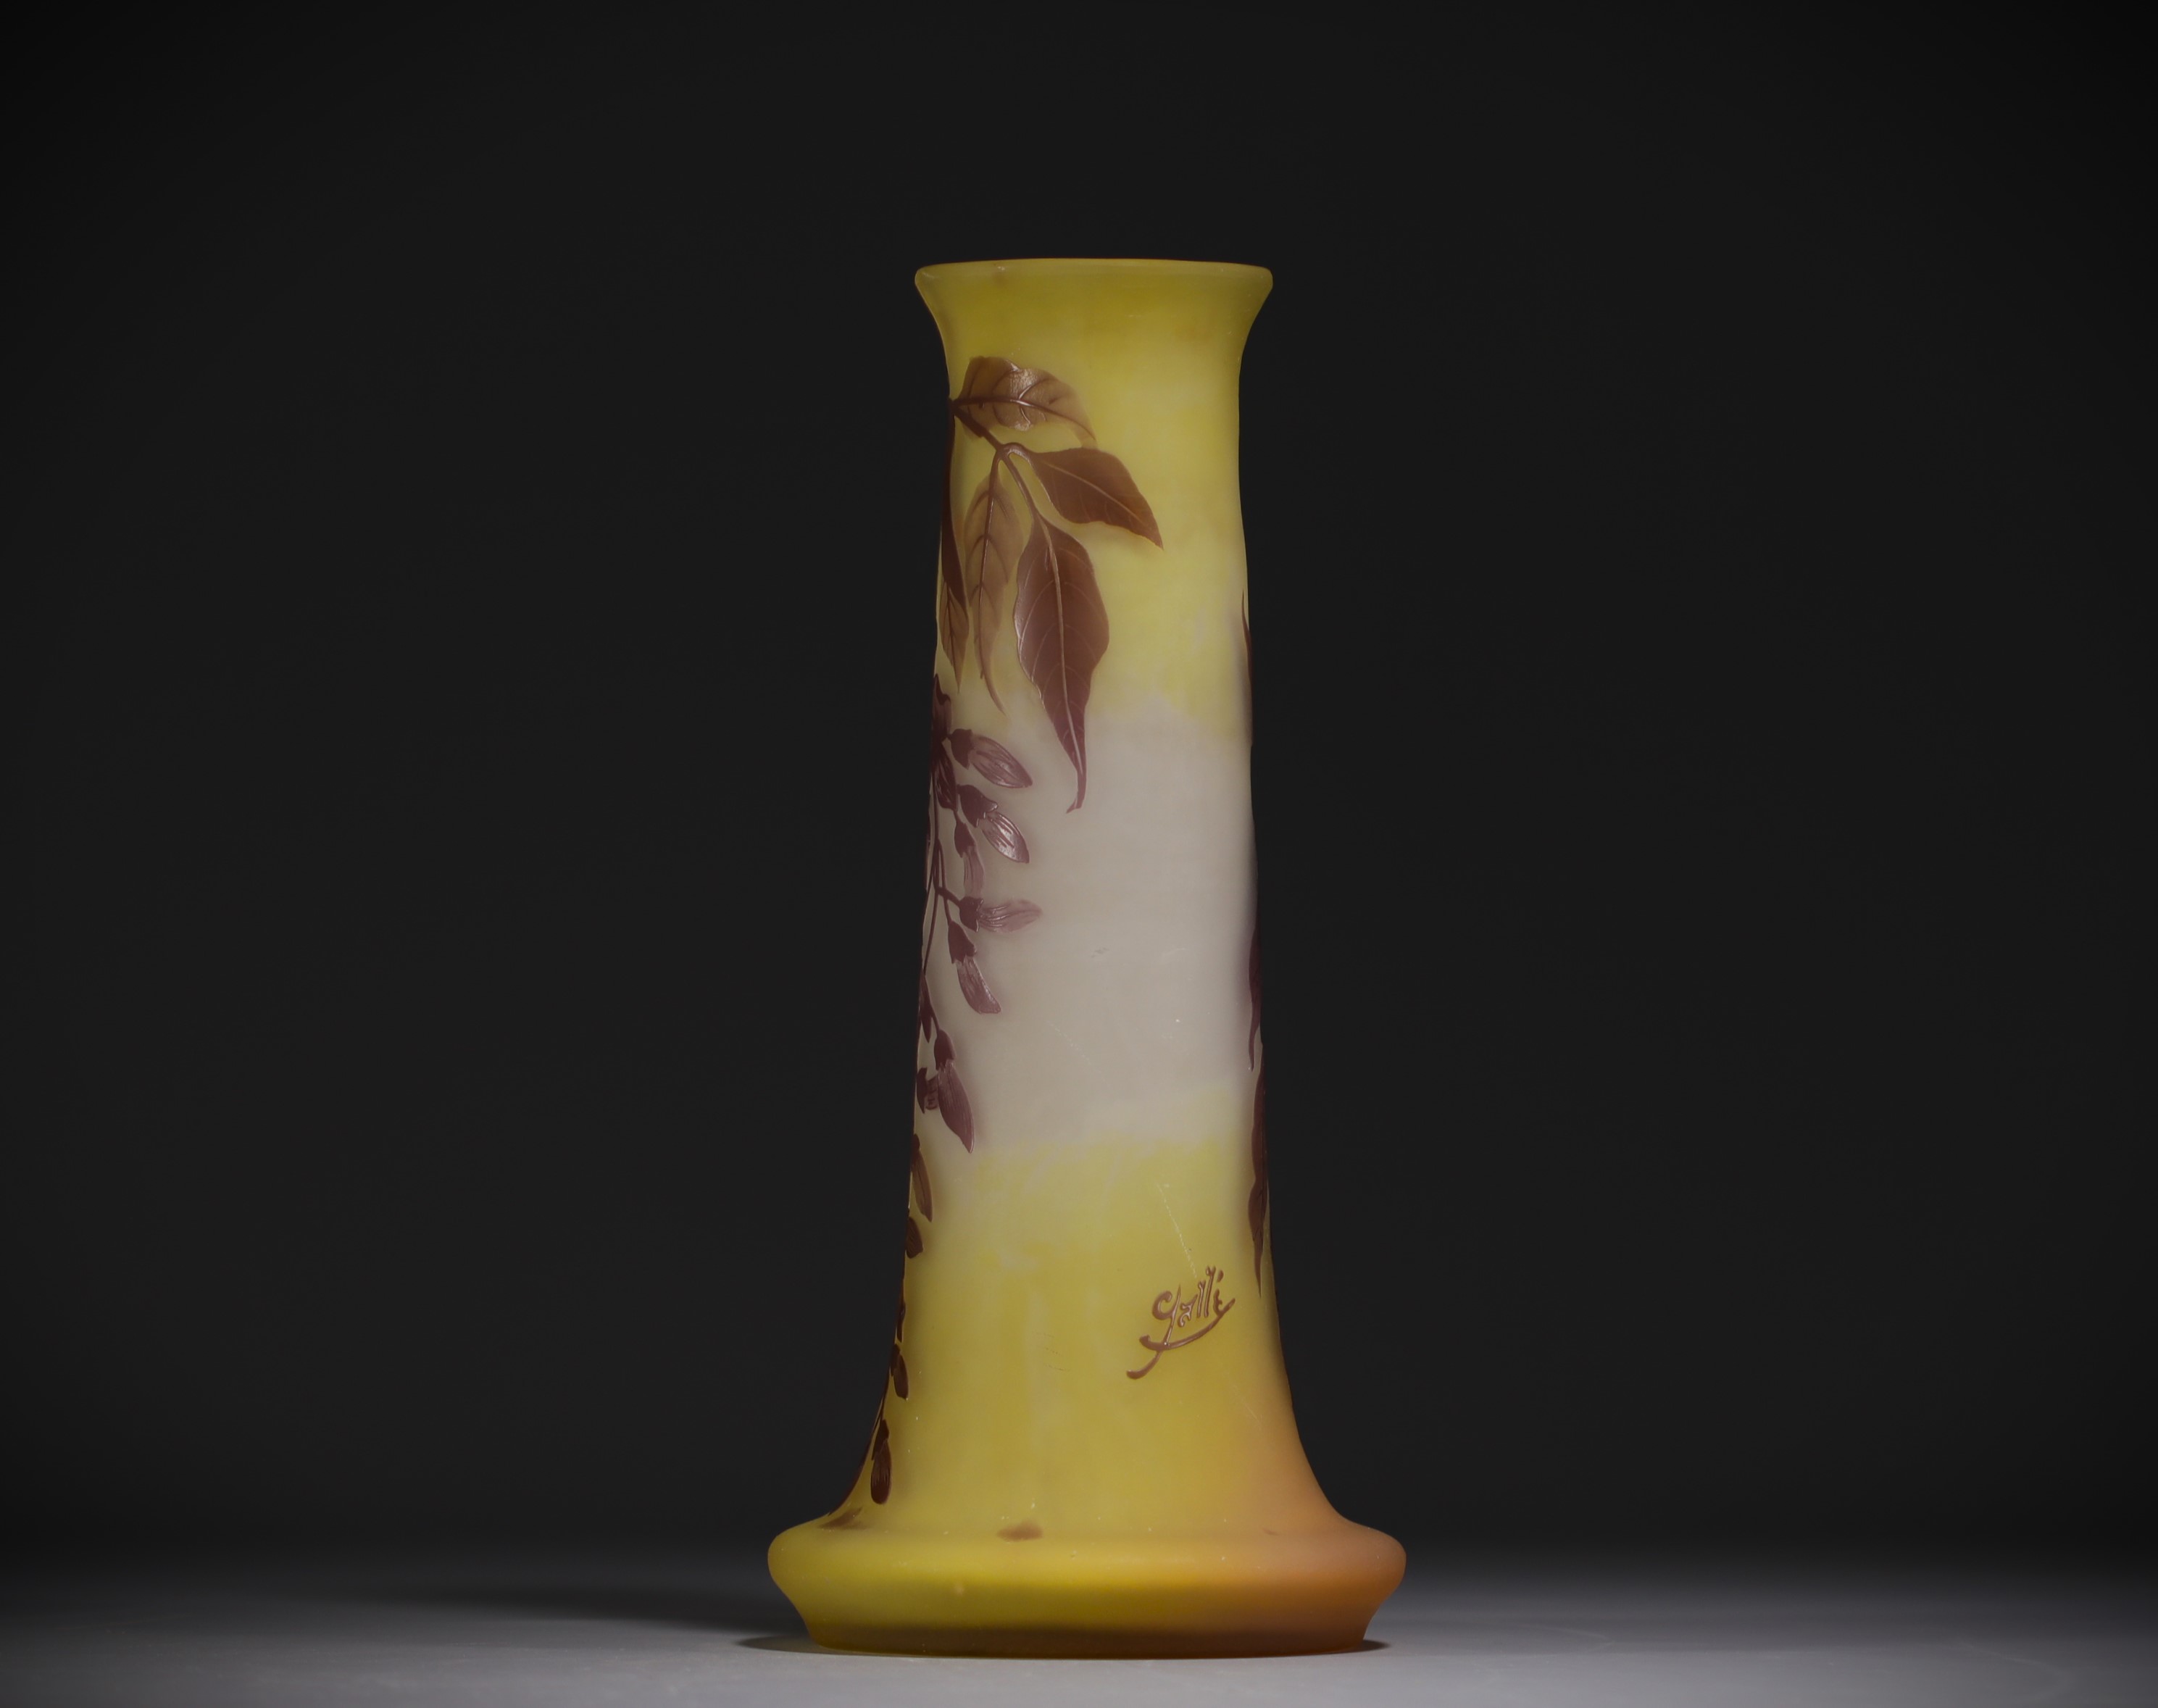 Emile GALLE (1846-1904) Large acid-etched multi-layered glass vase, wisteria design, signed. - Image 2 of 4